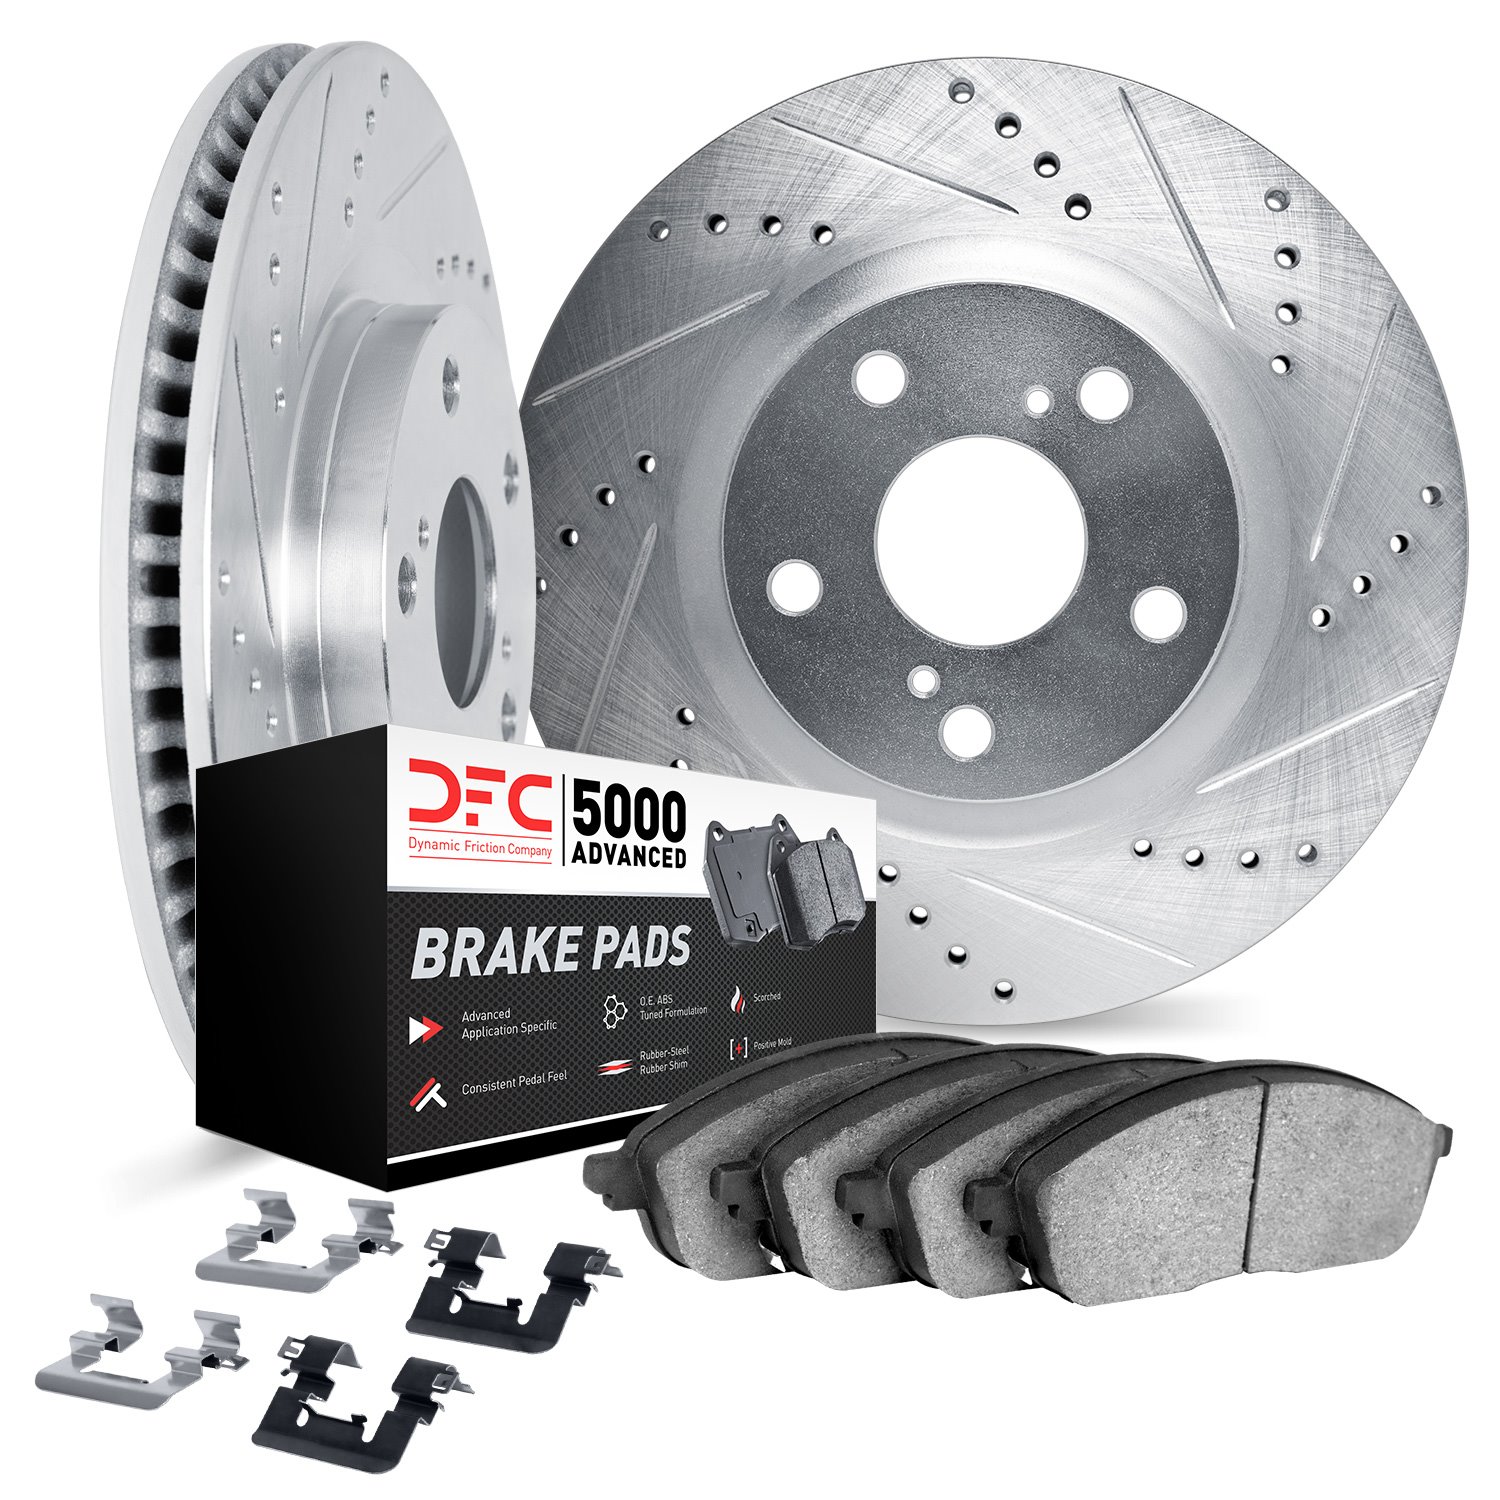 7512-11197 Drilled/Slotted Brake Rotors w/5000 Advanced Brake Pads Kit & Hardware [Silver], Fits Select Multiple Makes/Models, P